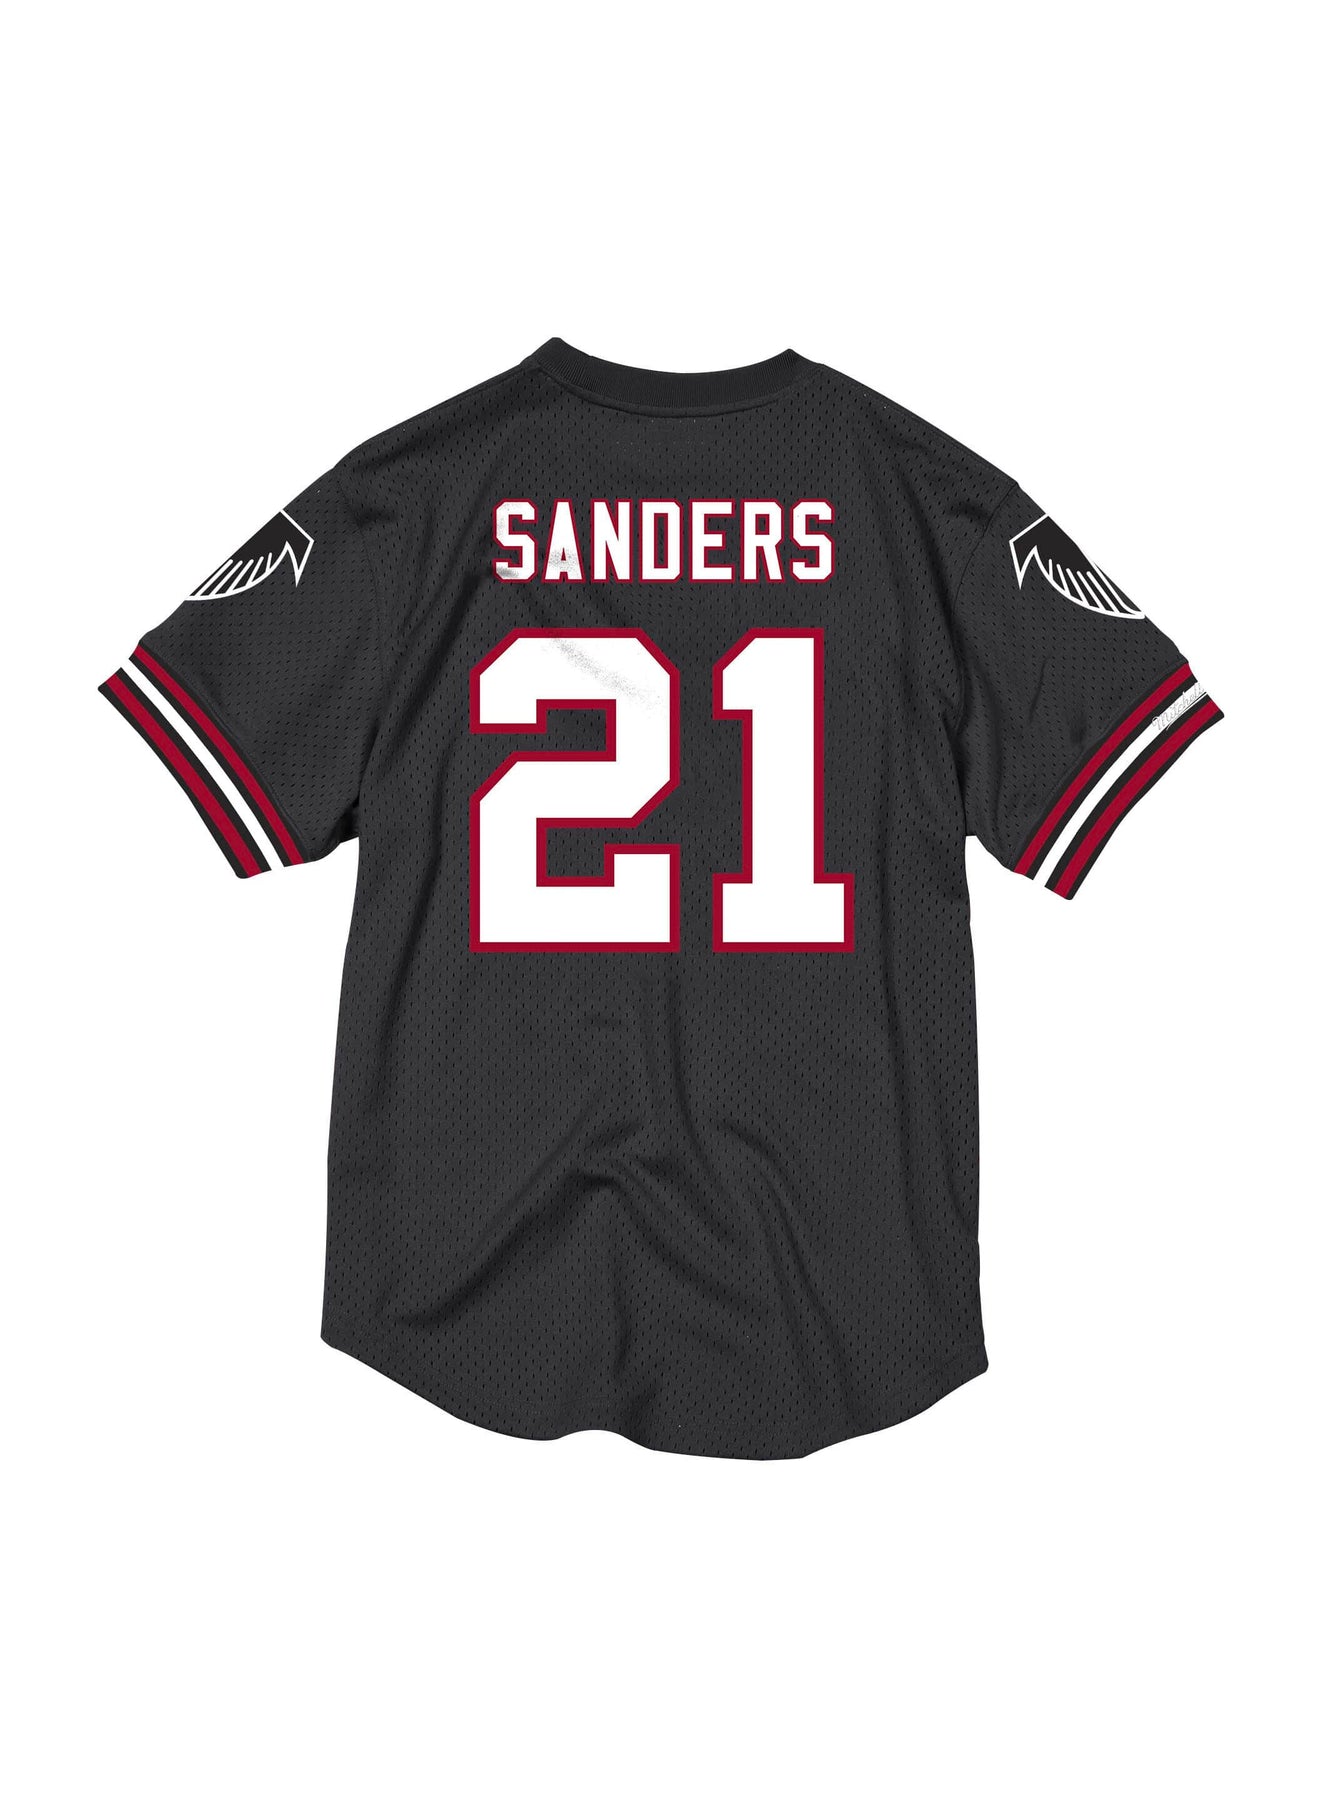 NFL Throwback Jerseys - Atlanta Falcons Deion Sanders & more